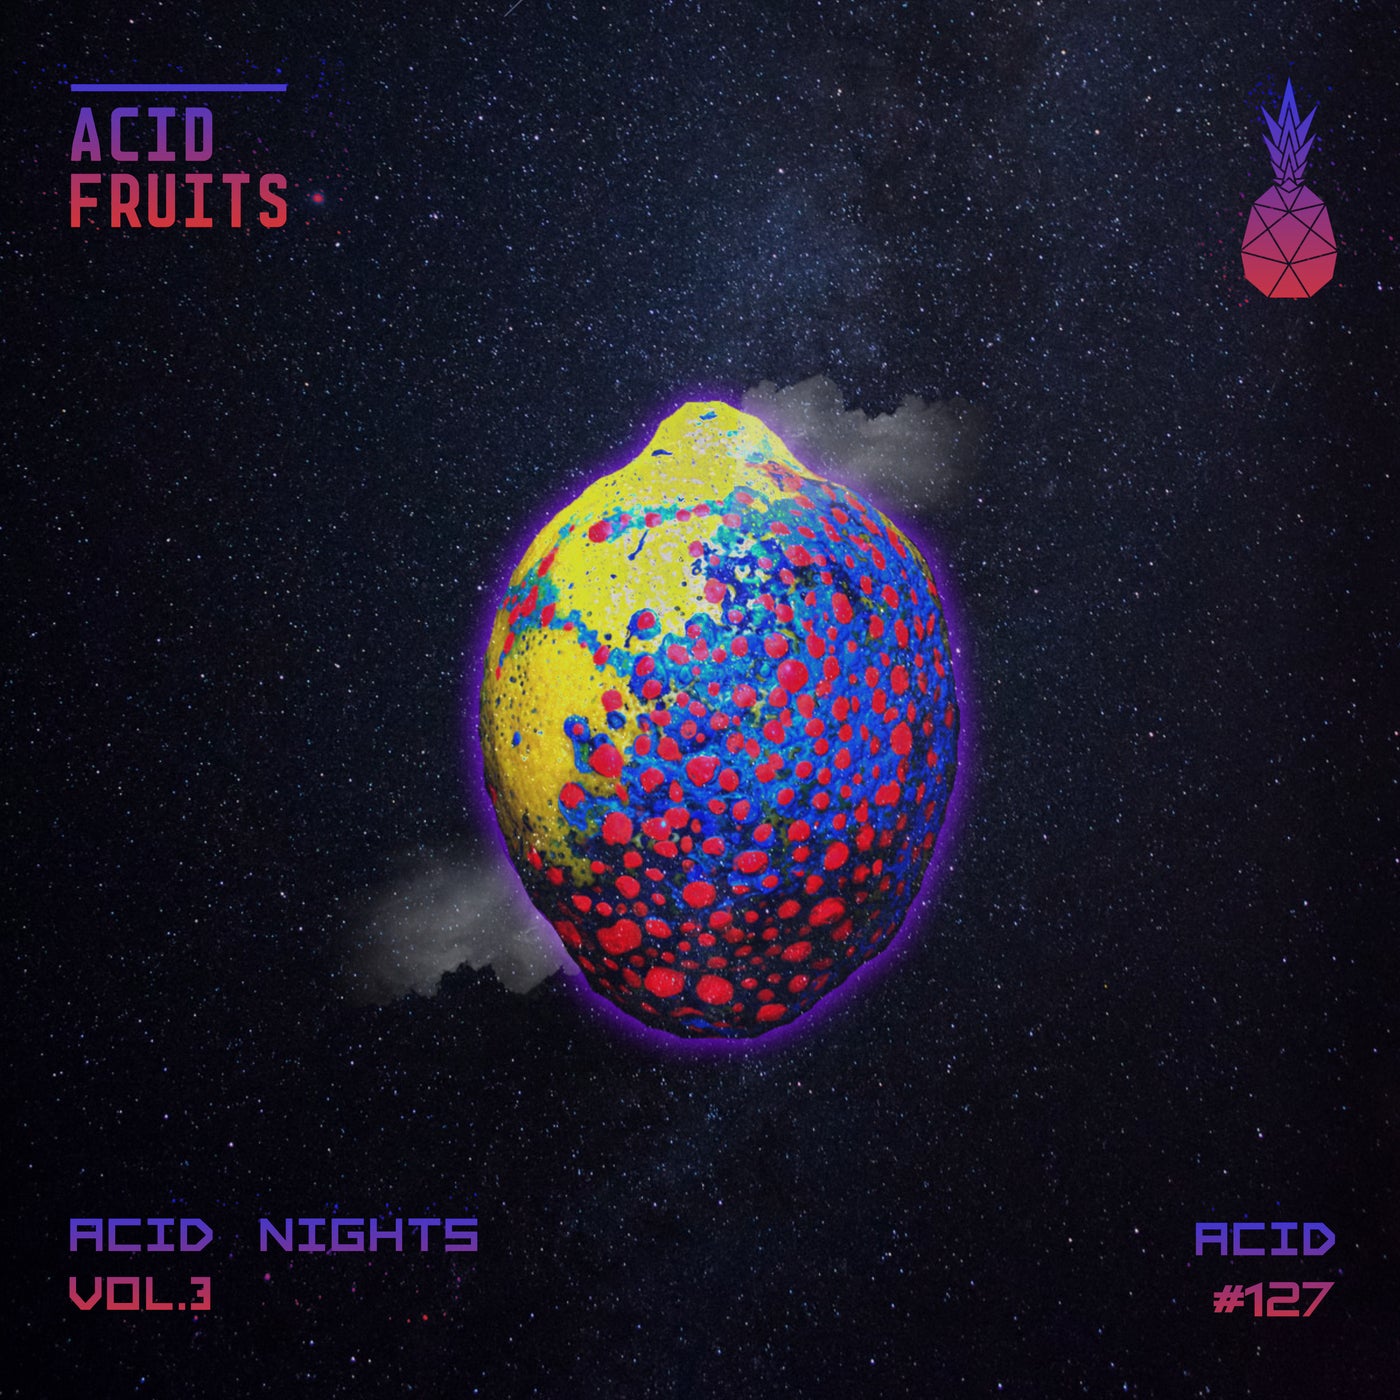 Acid Nights Vol.3